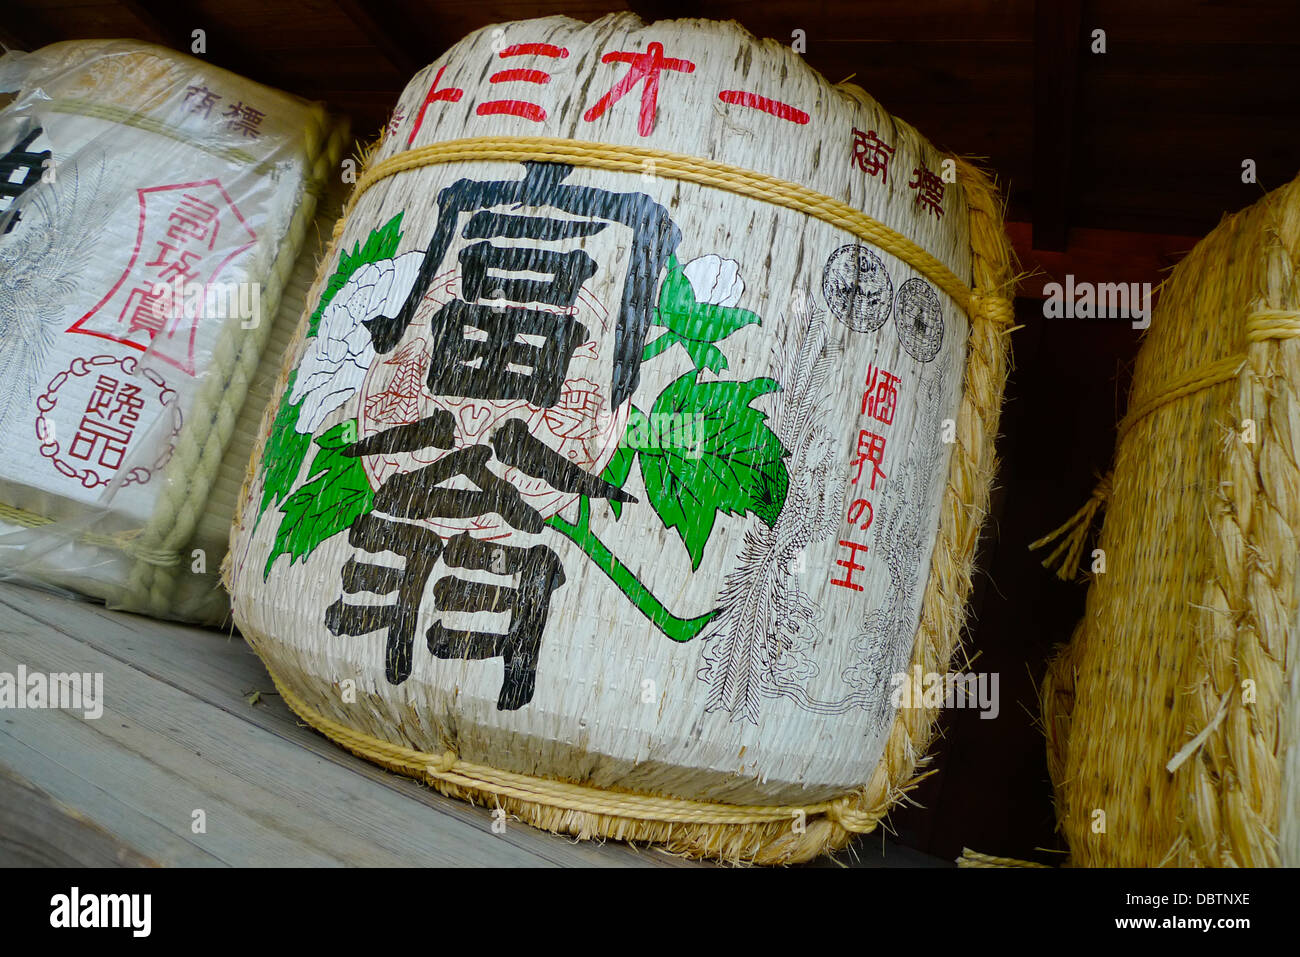 Sake barrels (kazaridaru) at a shrine in Japan. Stock Photo